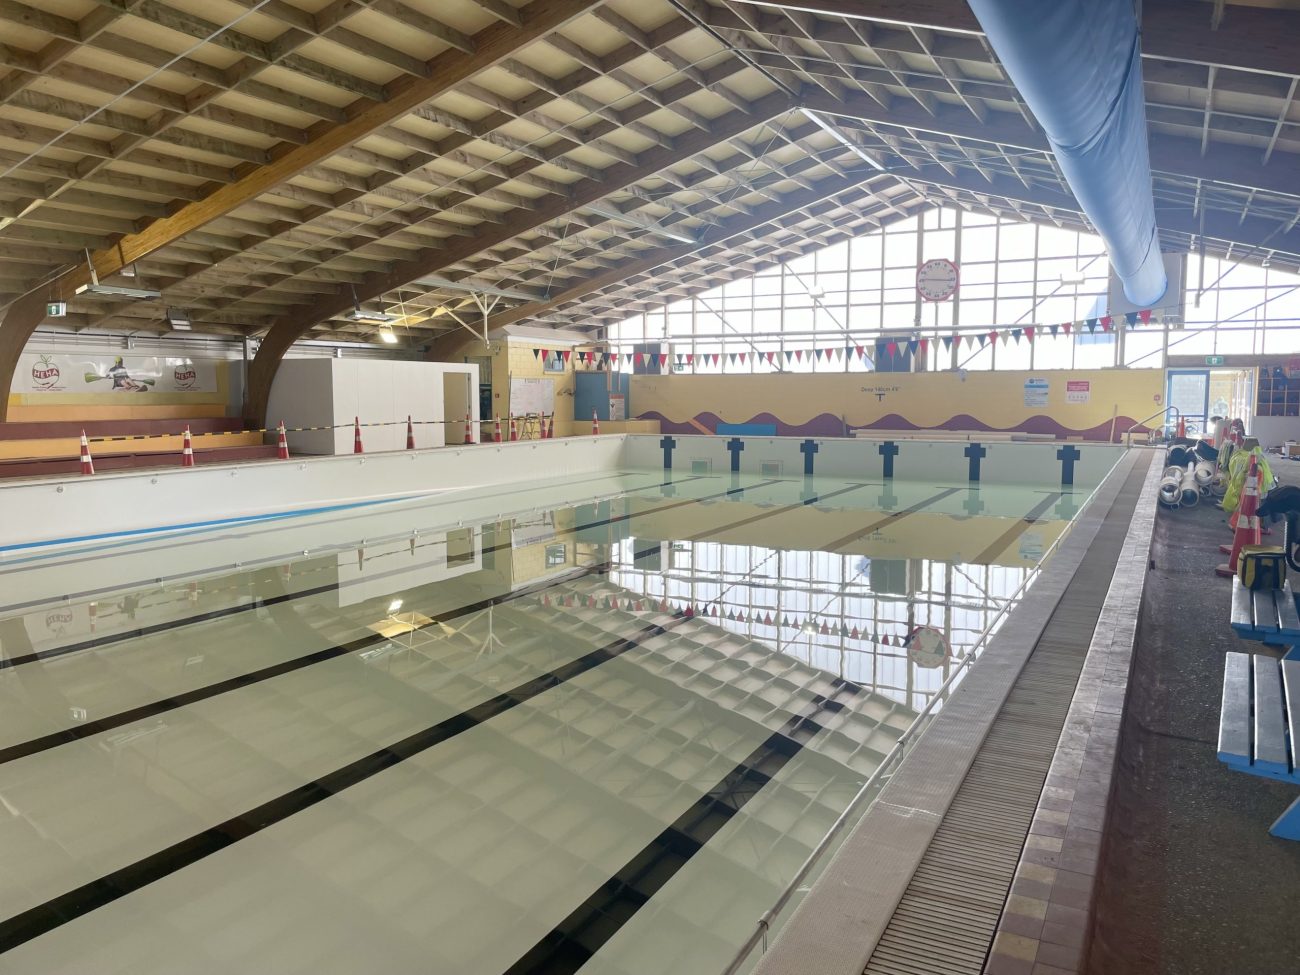 Progress on the Hokitika Swimming Pool